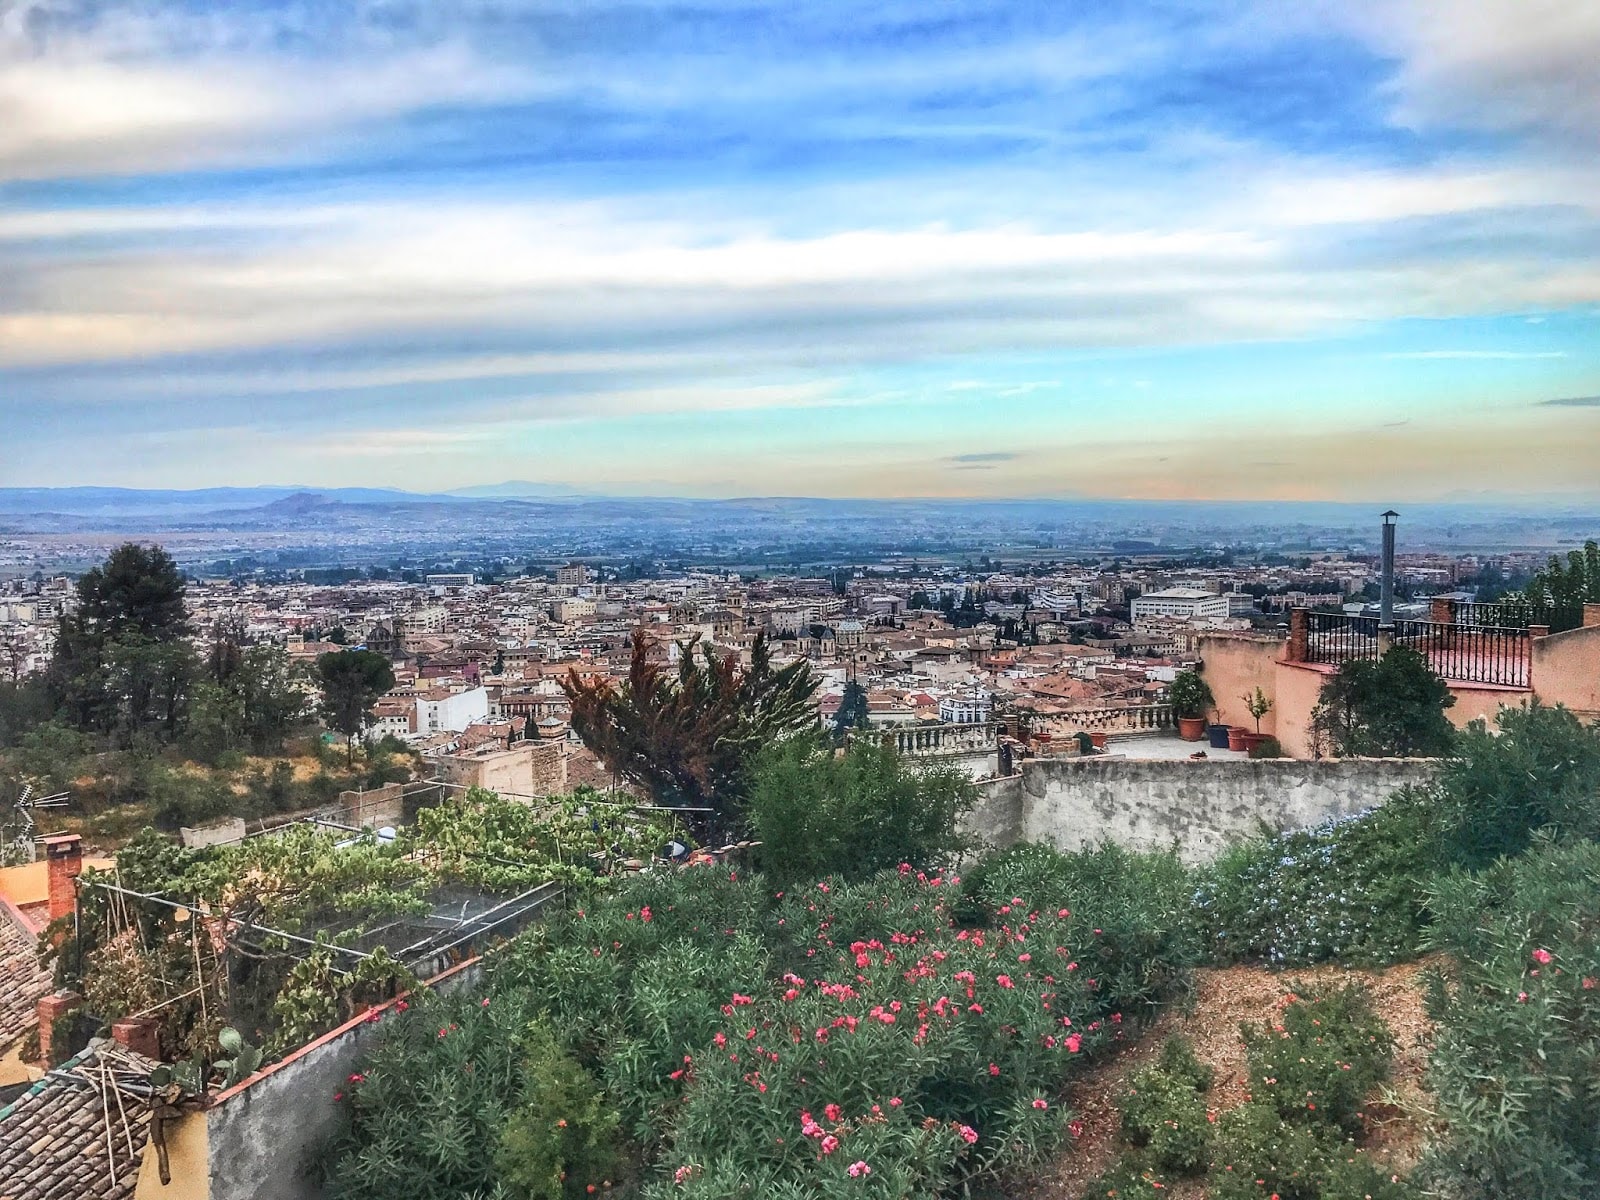 Granada Spain Travel Guide